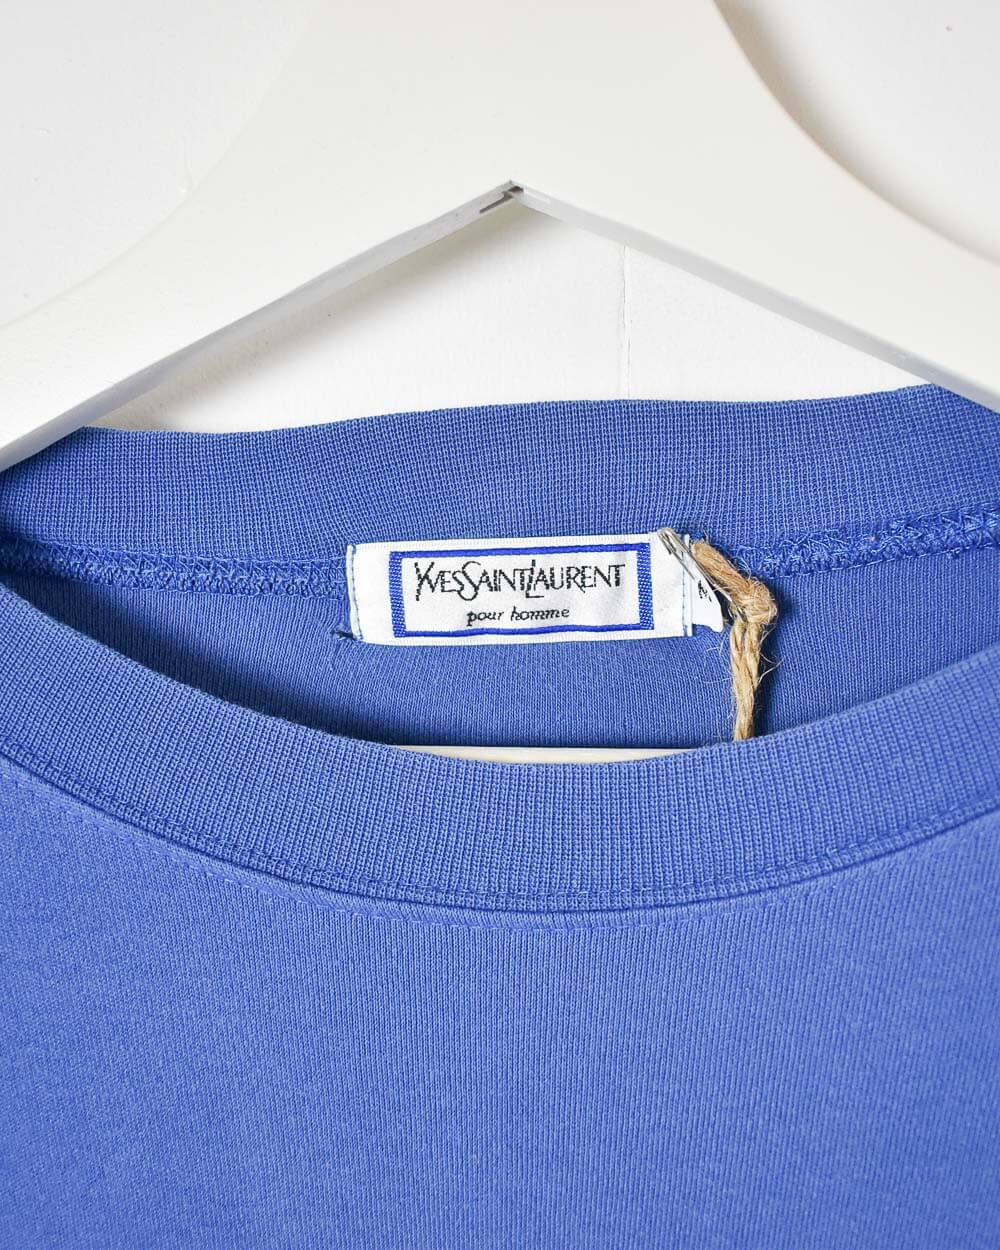 Blue Yves Saint Laurent Sweatshirt - Small